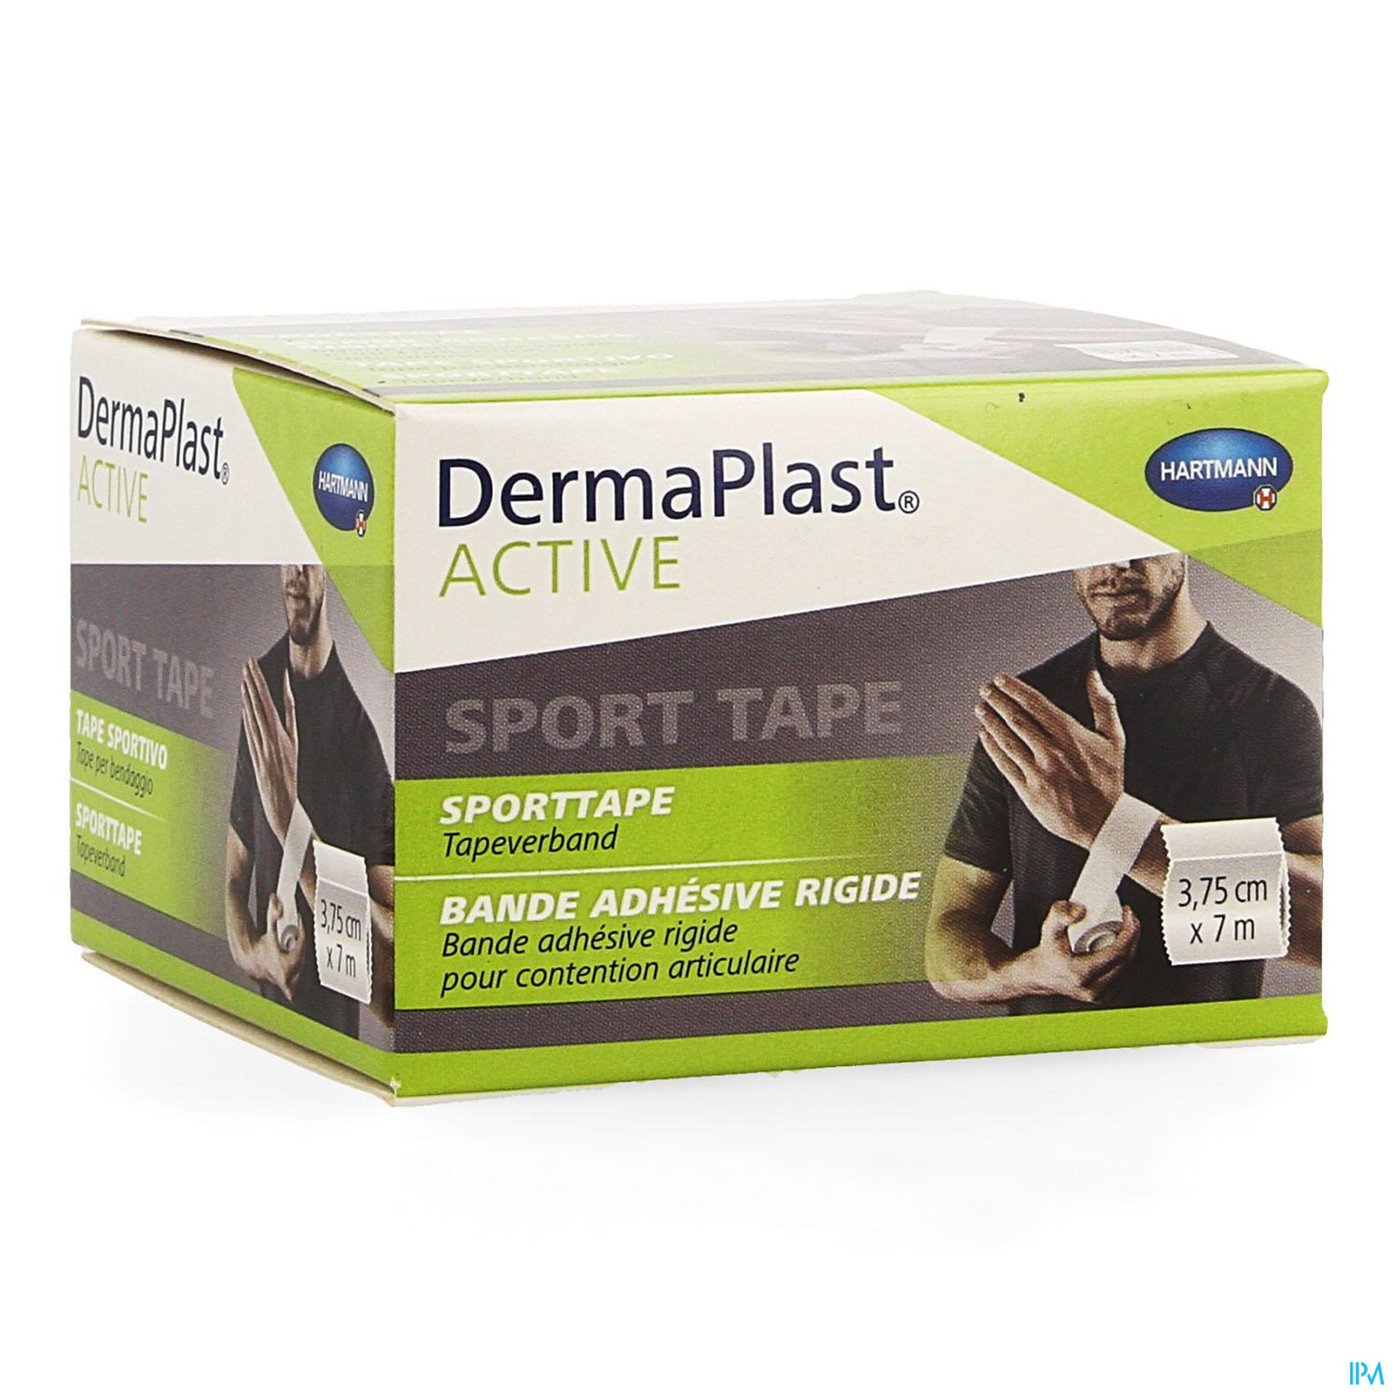 Dp Active Sport Tape 3,75cm 1 P/s packshot